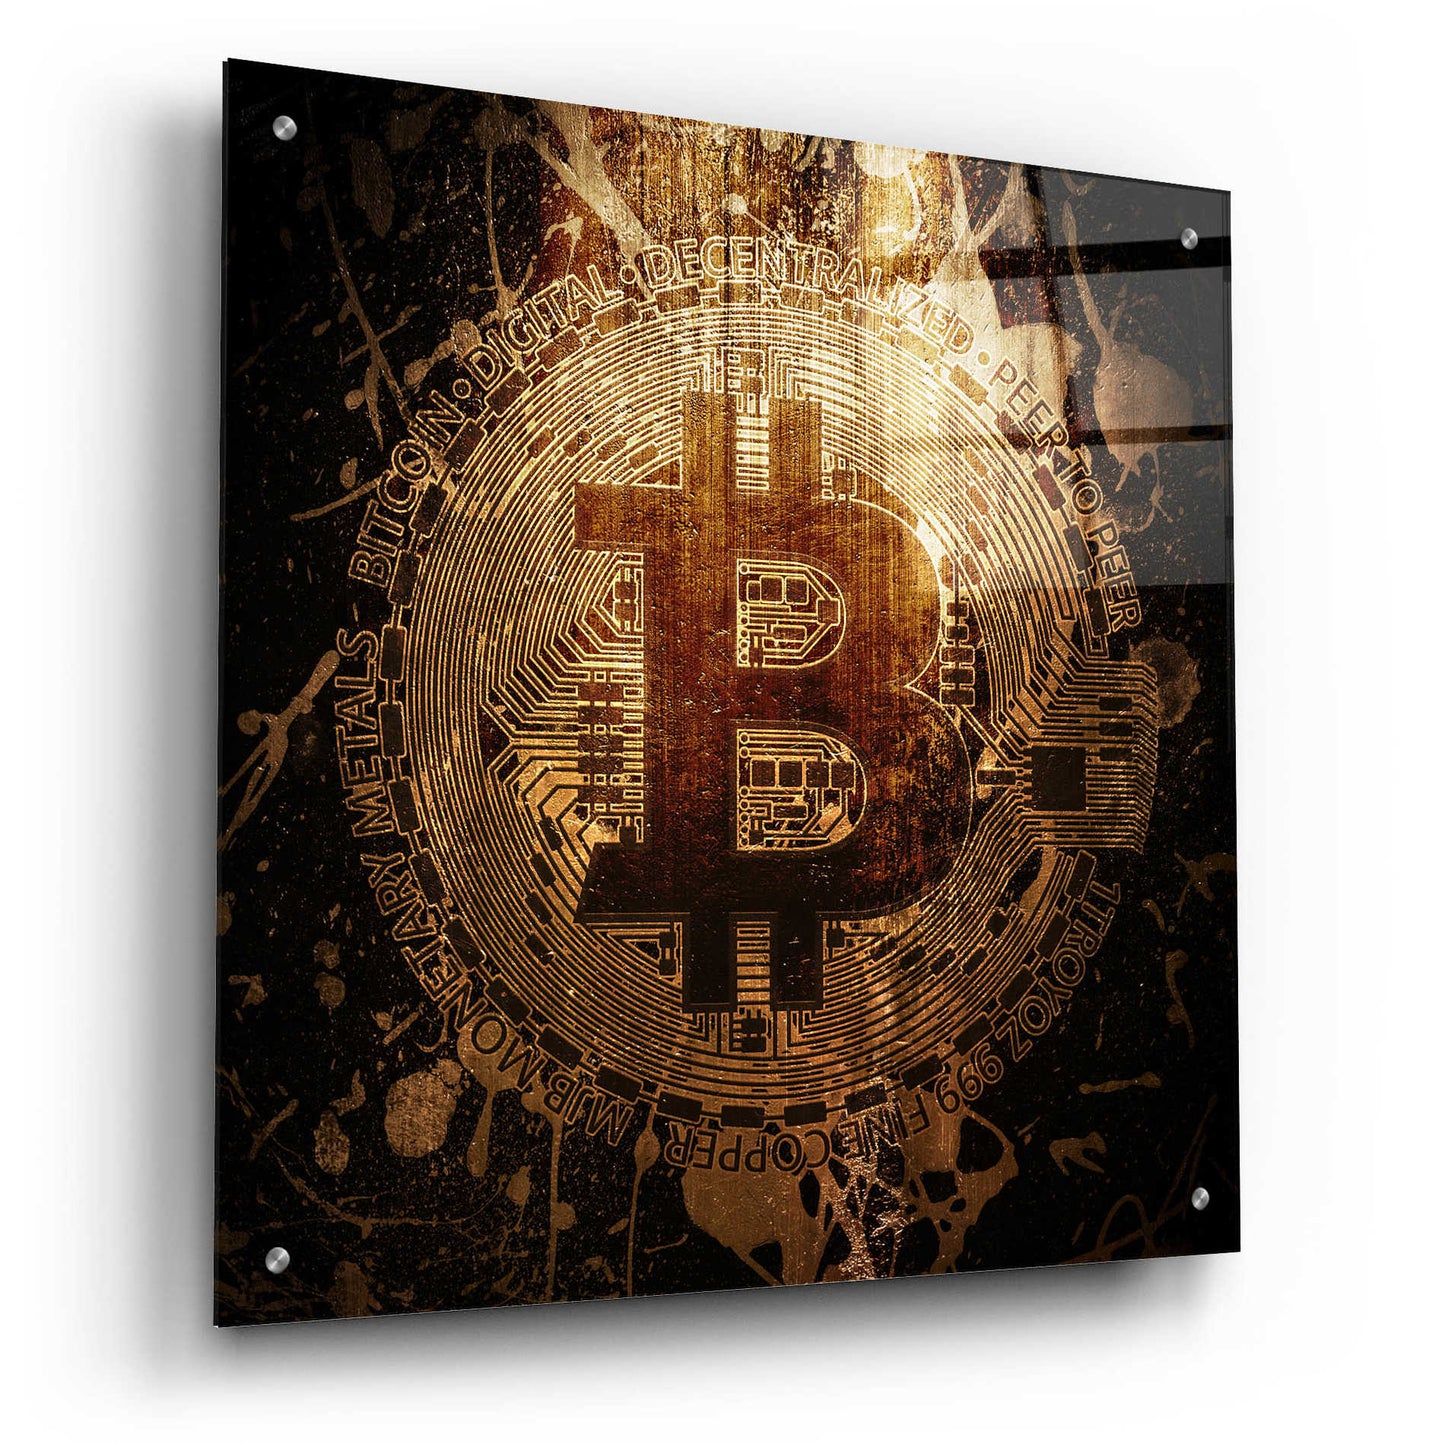 Epic Art 'Bitcoin Zinc' by Cameron Gray Acrylic Glass Wall Art,24x24